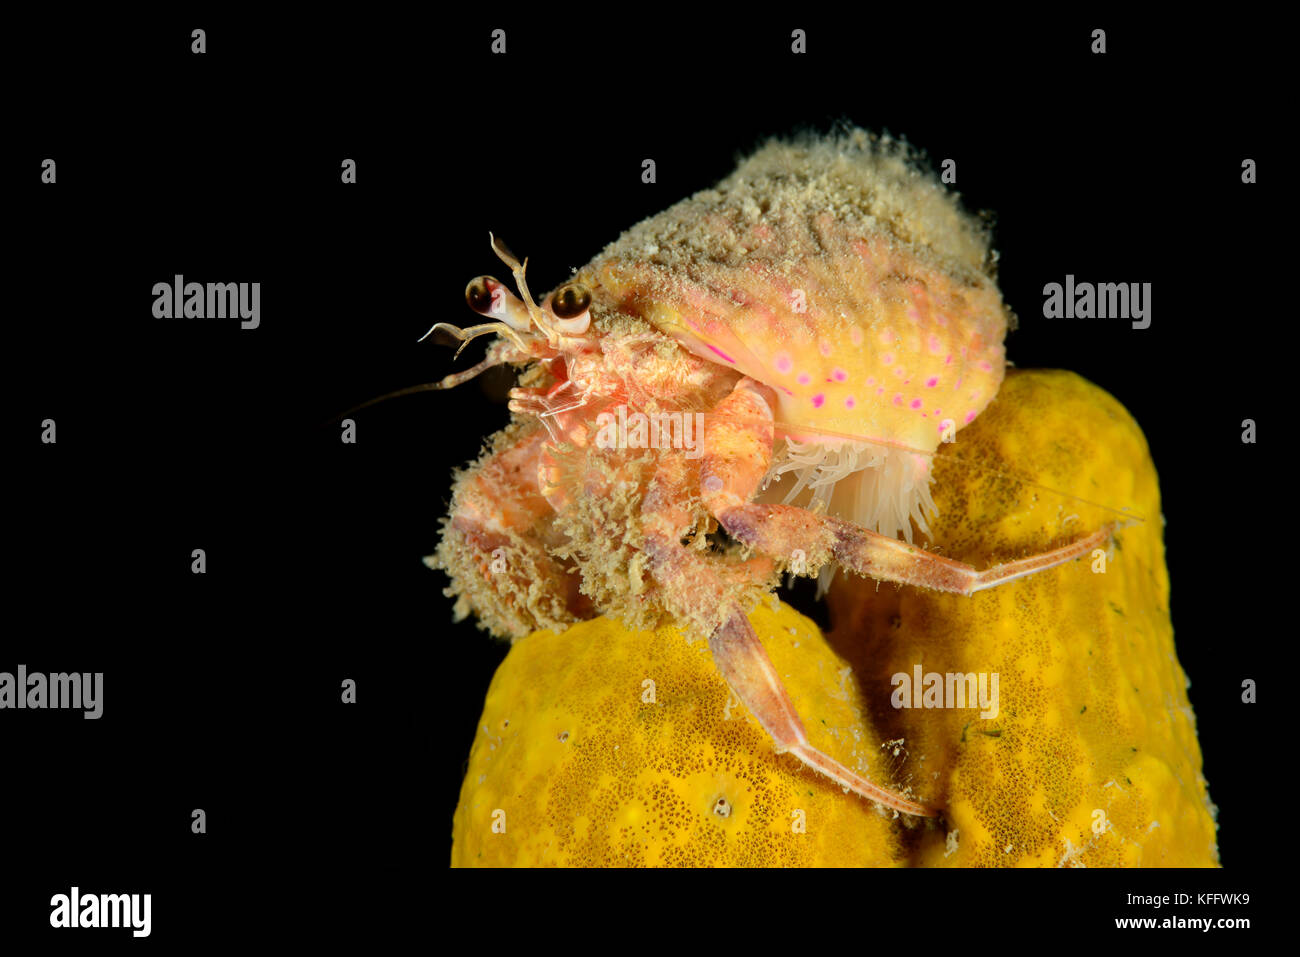 Prideauxs hermit crab and cloak anemone, Pagurus prideaux und Adamsia palliata, typical symbiosis, Adriatic Sea, Mediterranean Sea, Kornati, Croatia Stock Photo